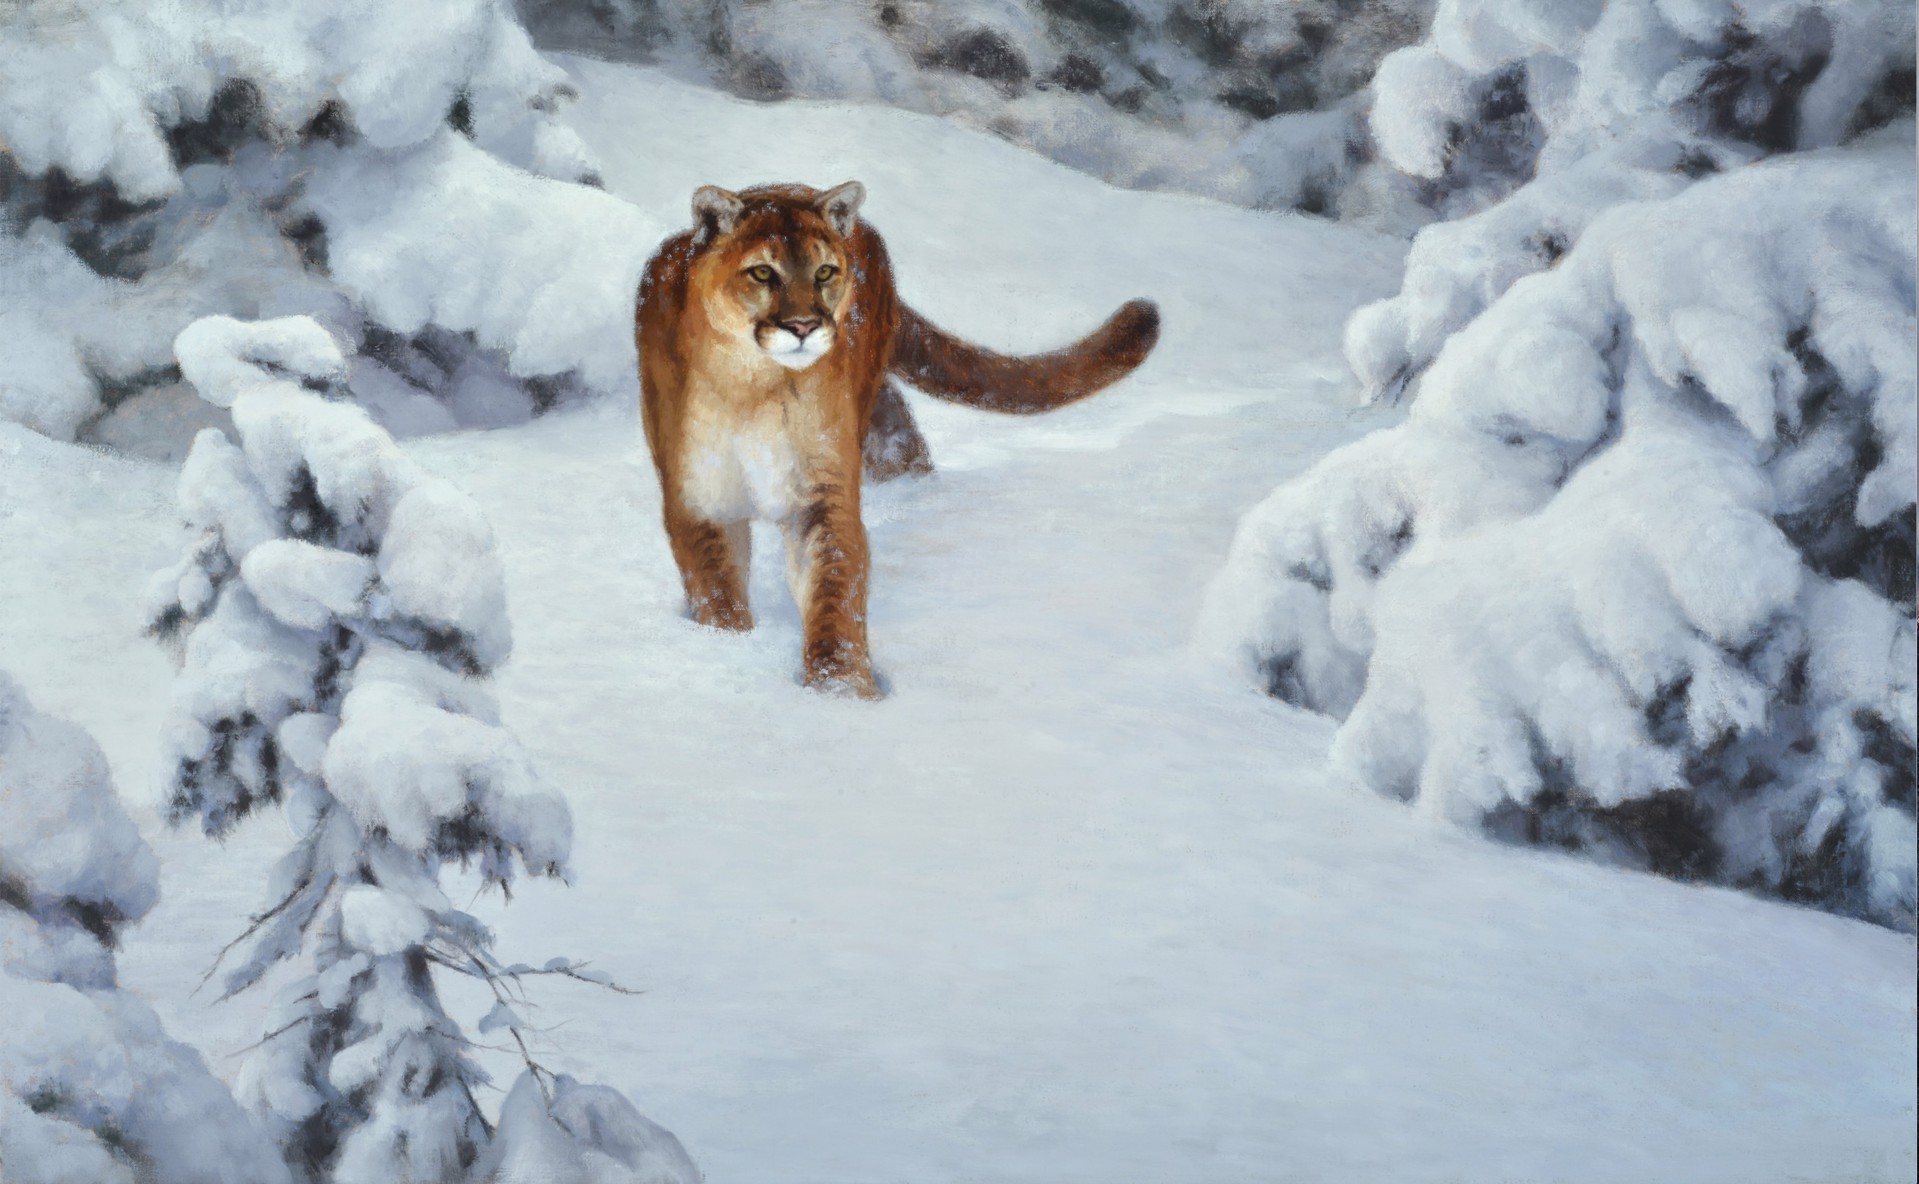 SNOWCAT by Kyle Sims